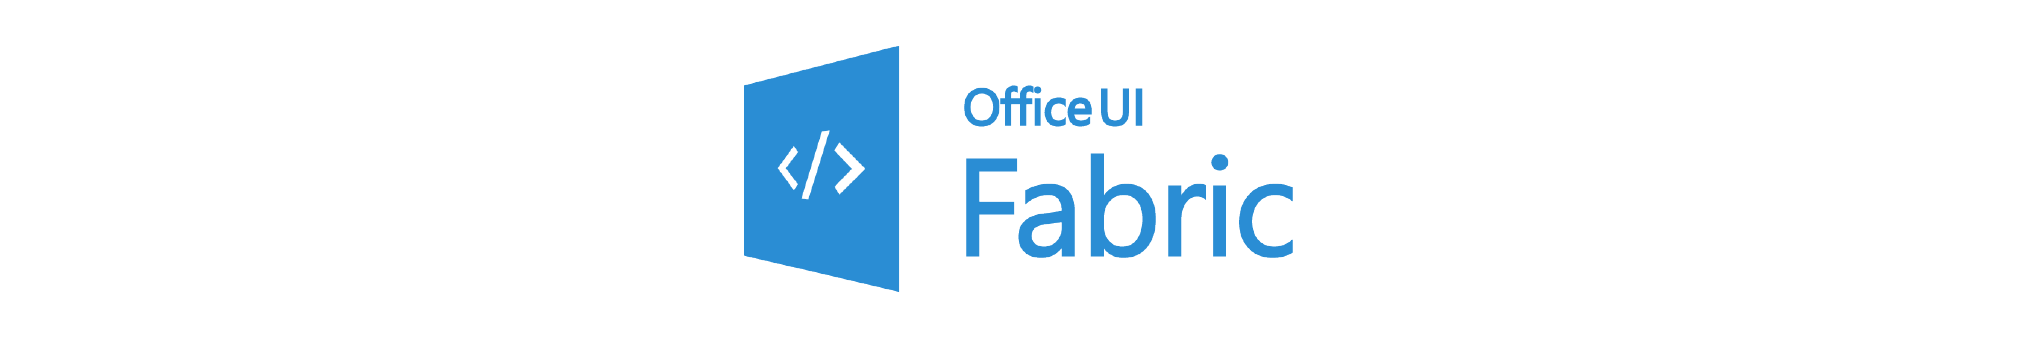 Office-UI-Fabric